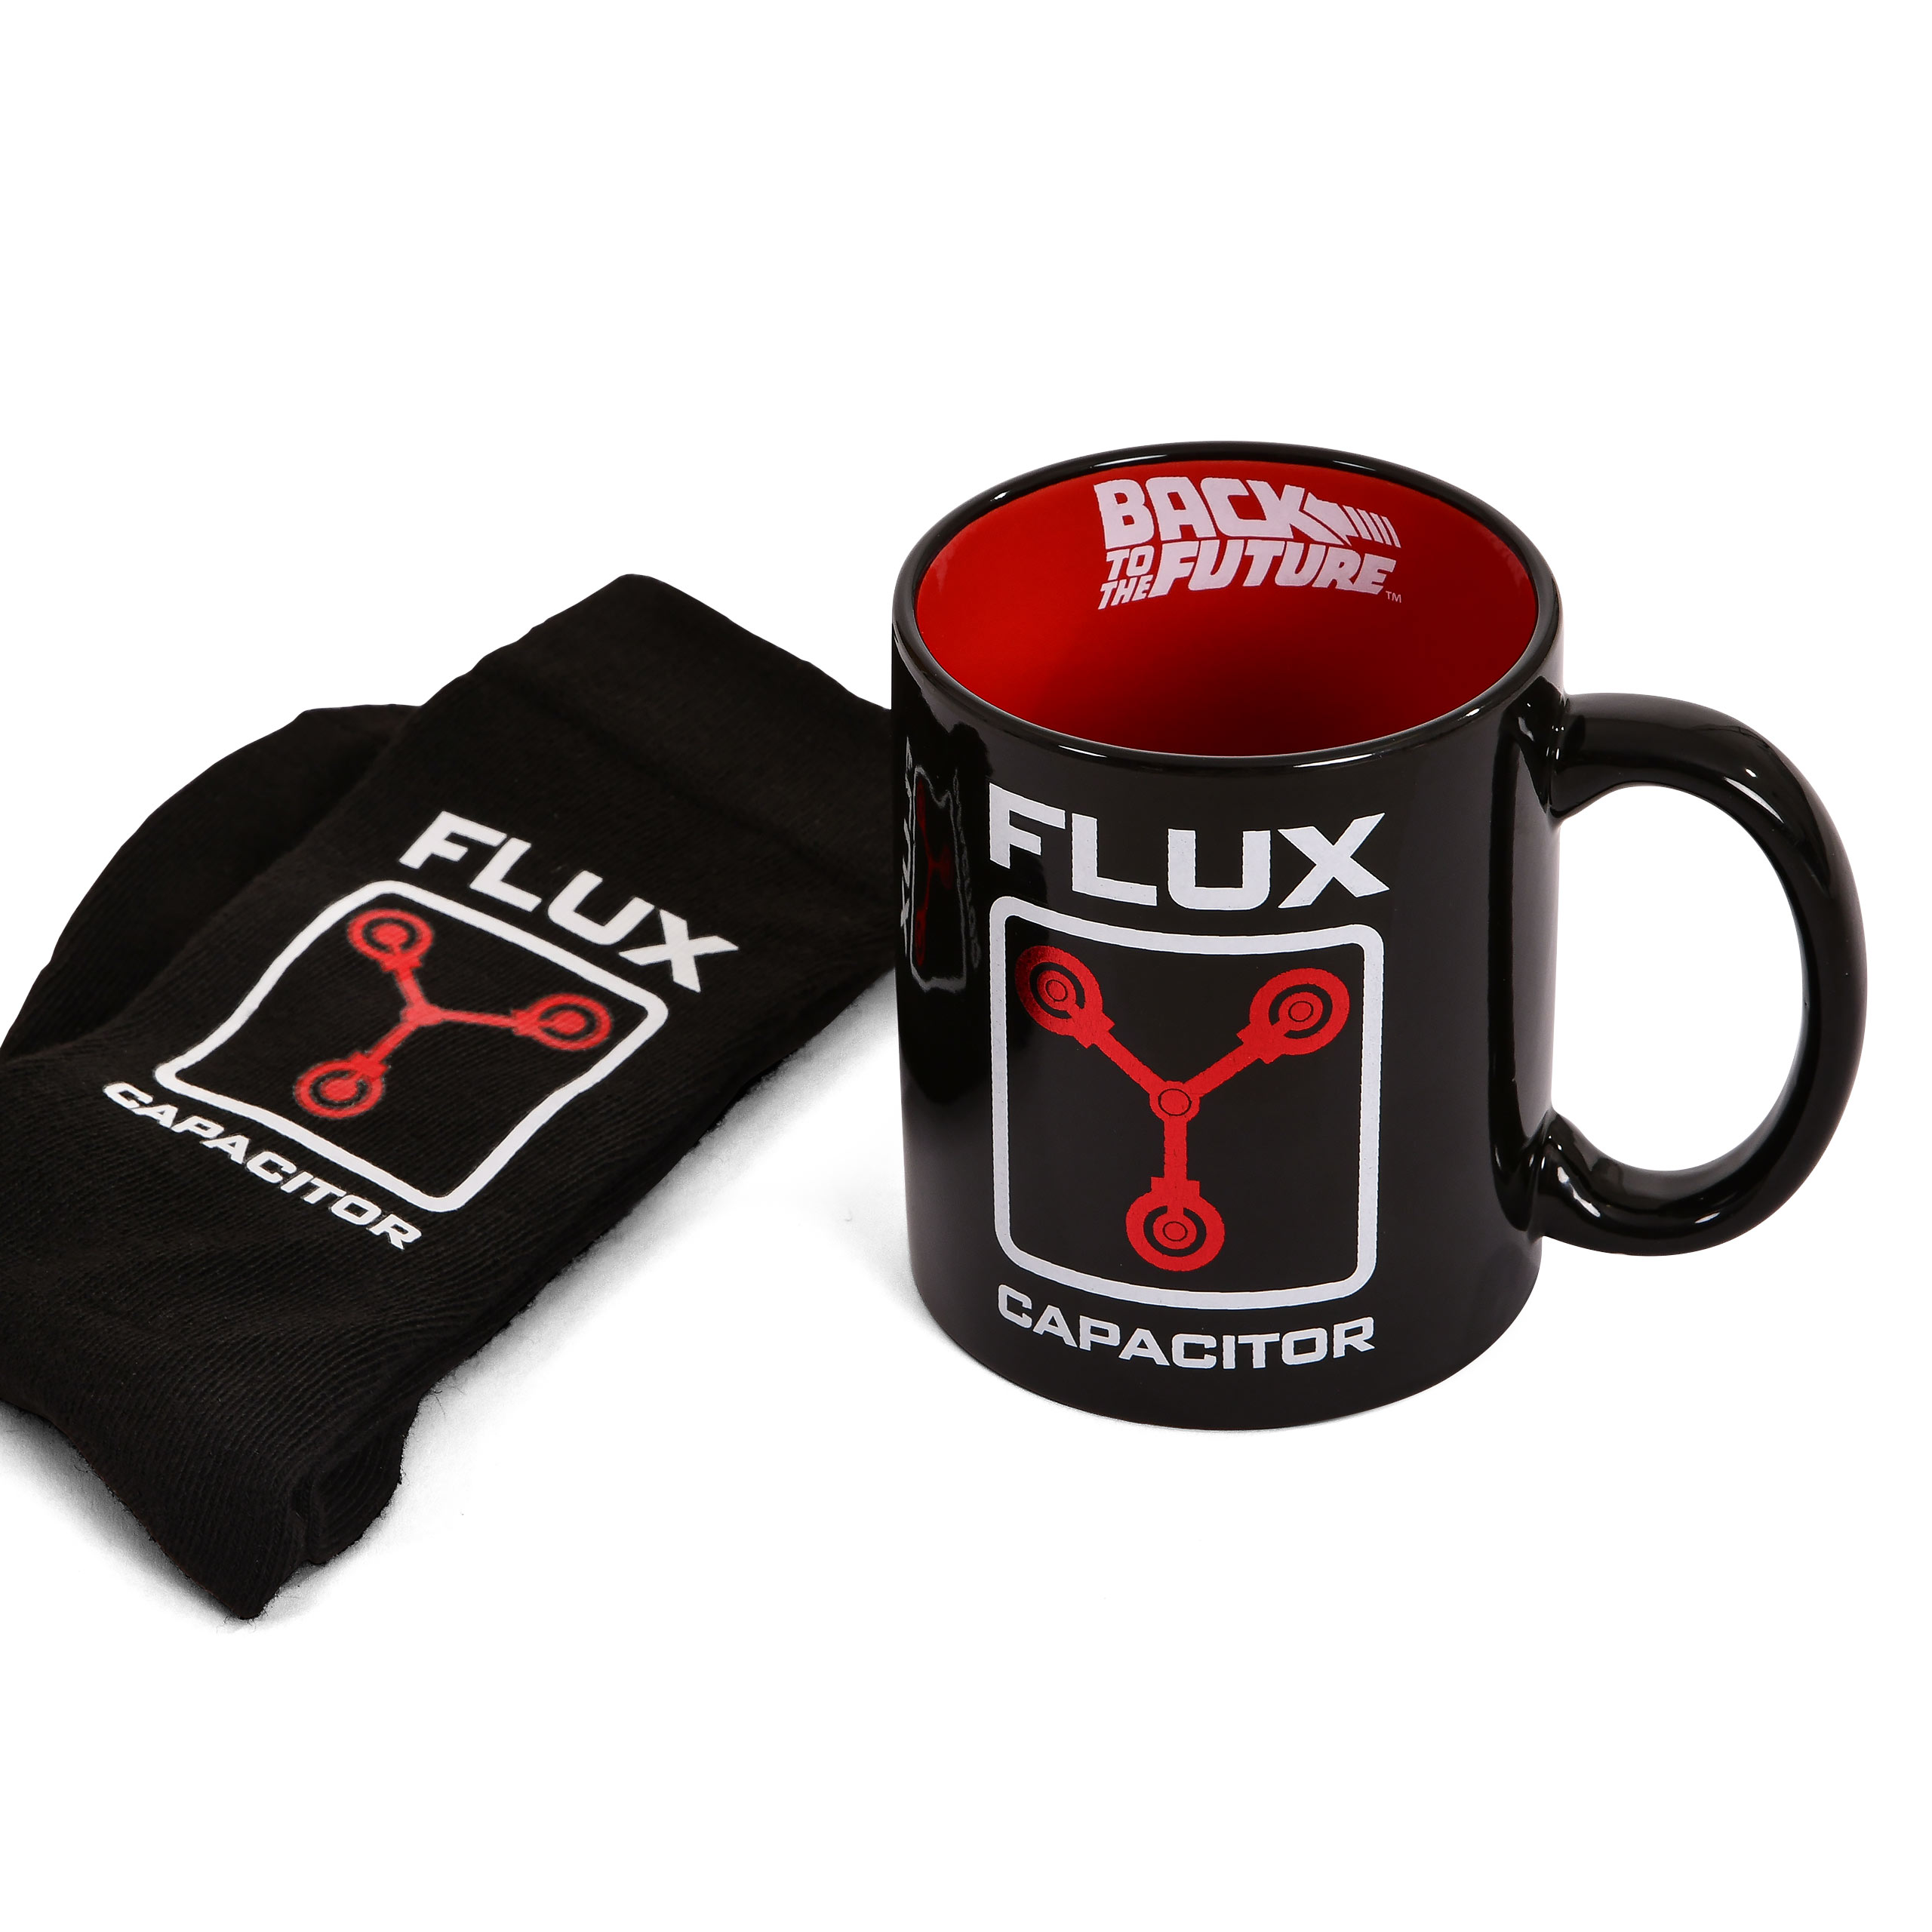 Back to the Future - Flux Capacitor Socks and Mug Set